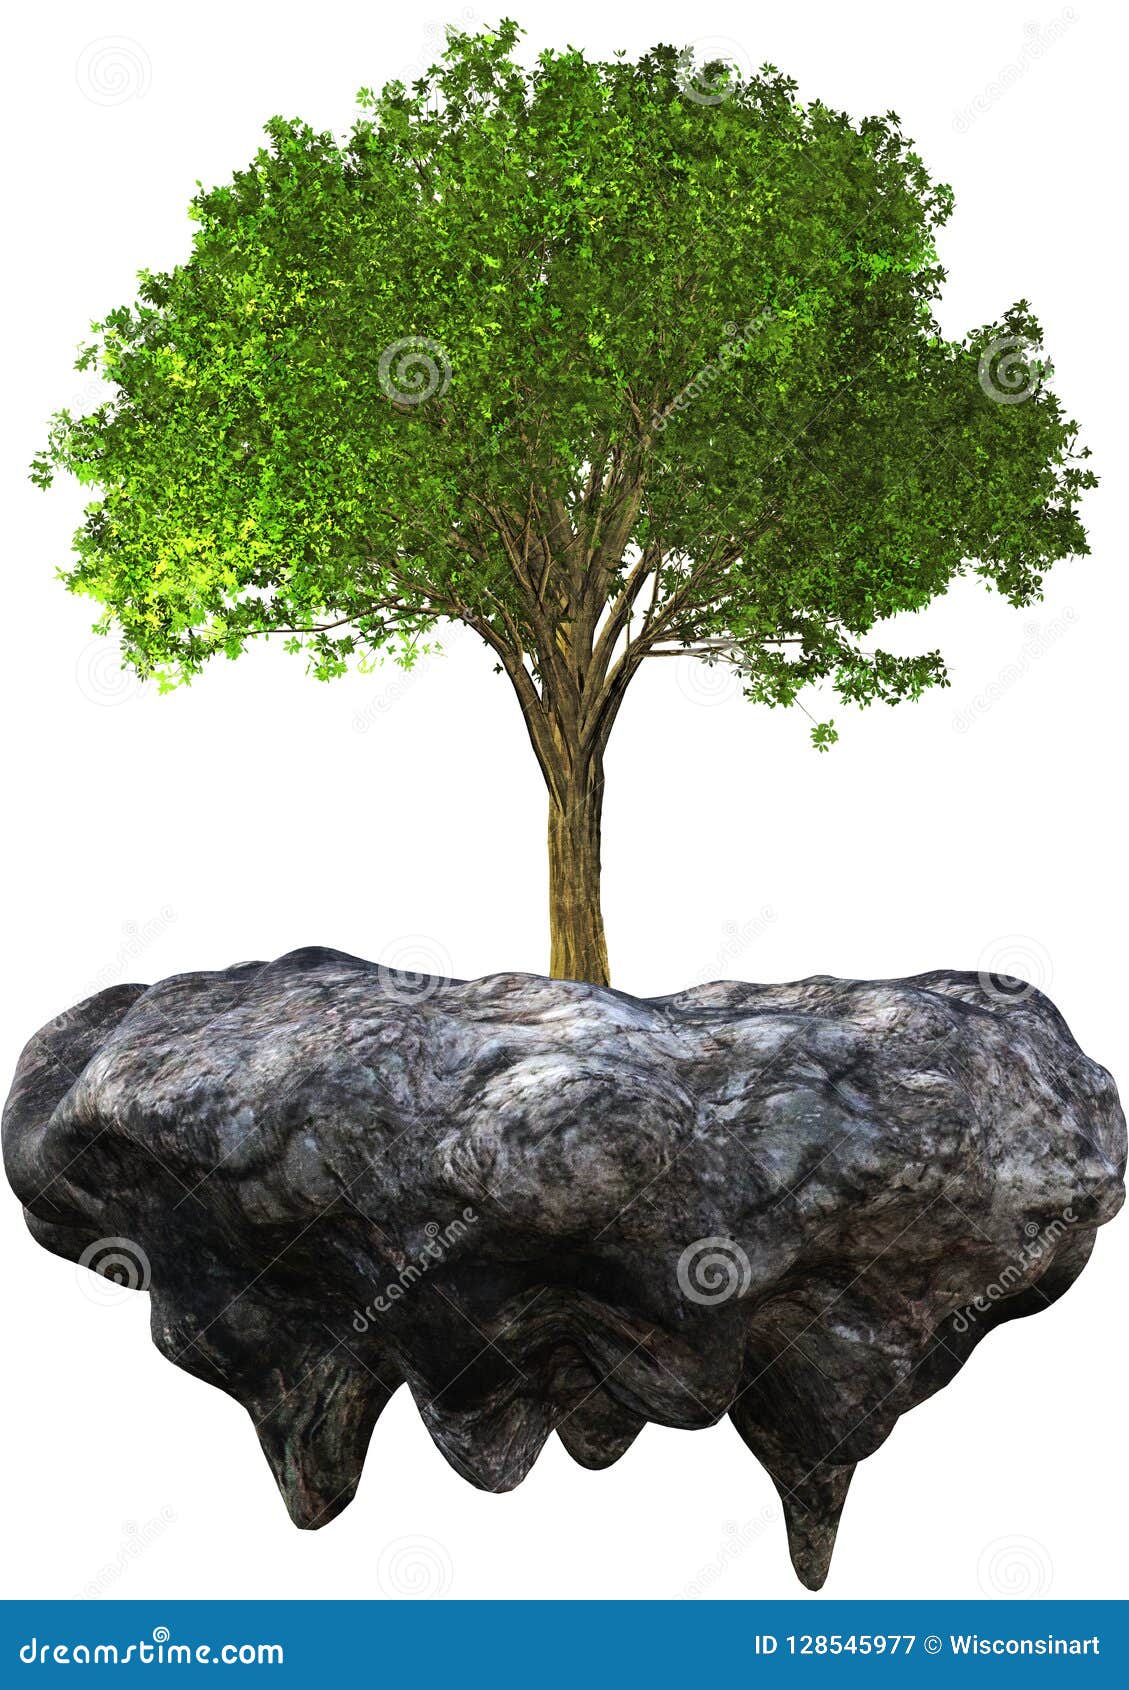 environment, environmentalism, tree, nature, 